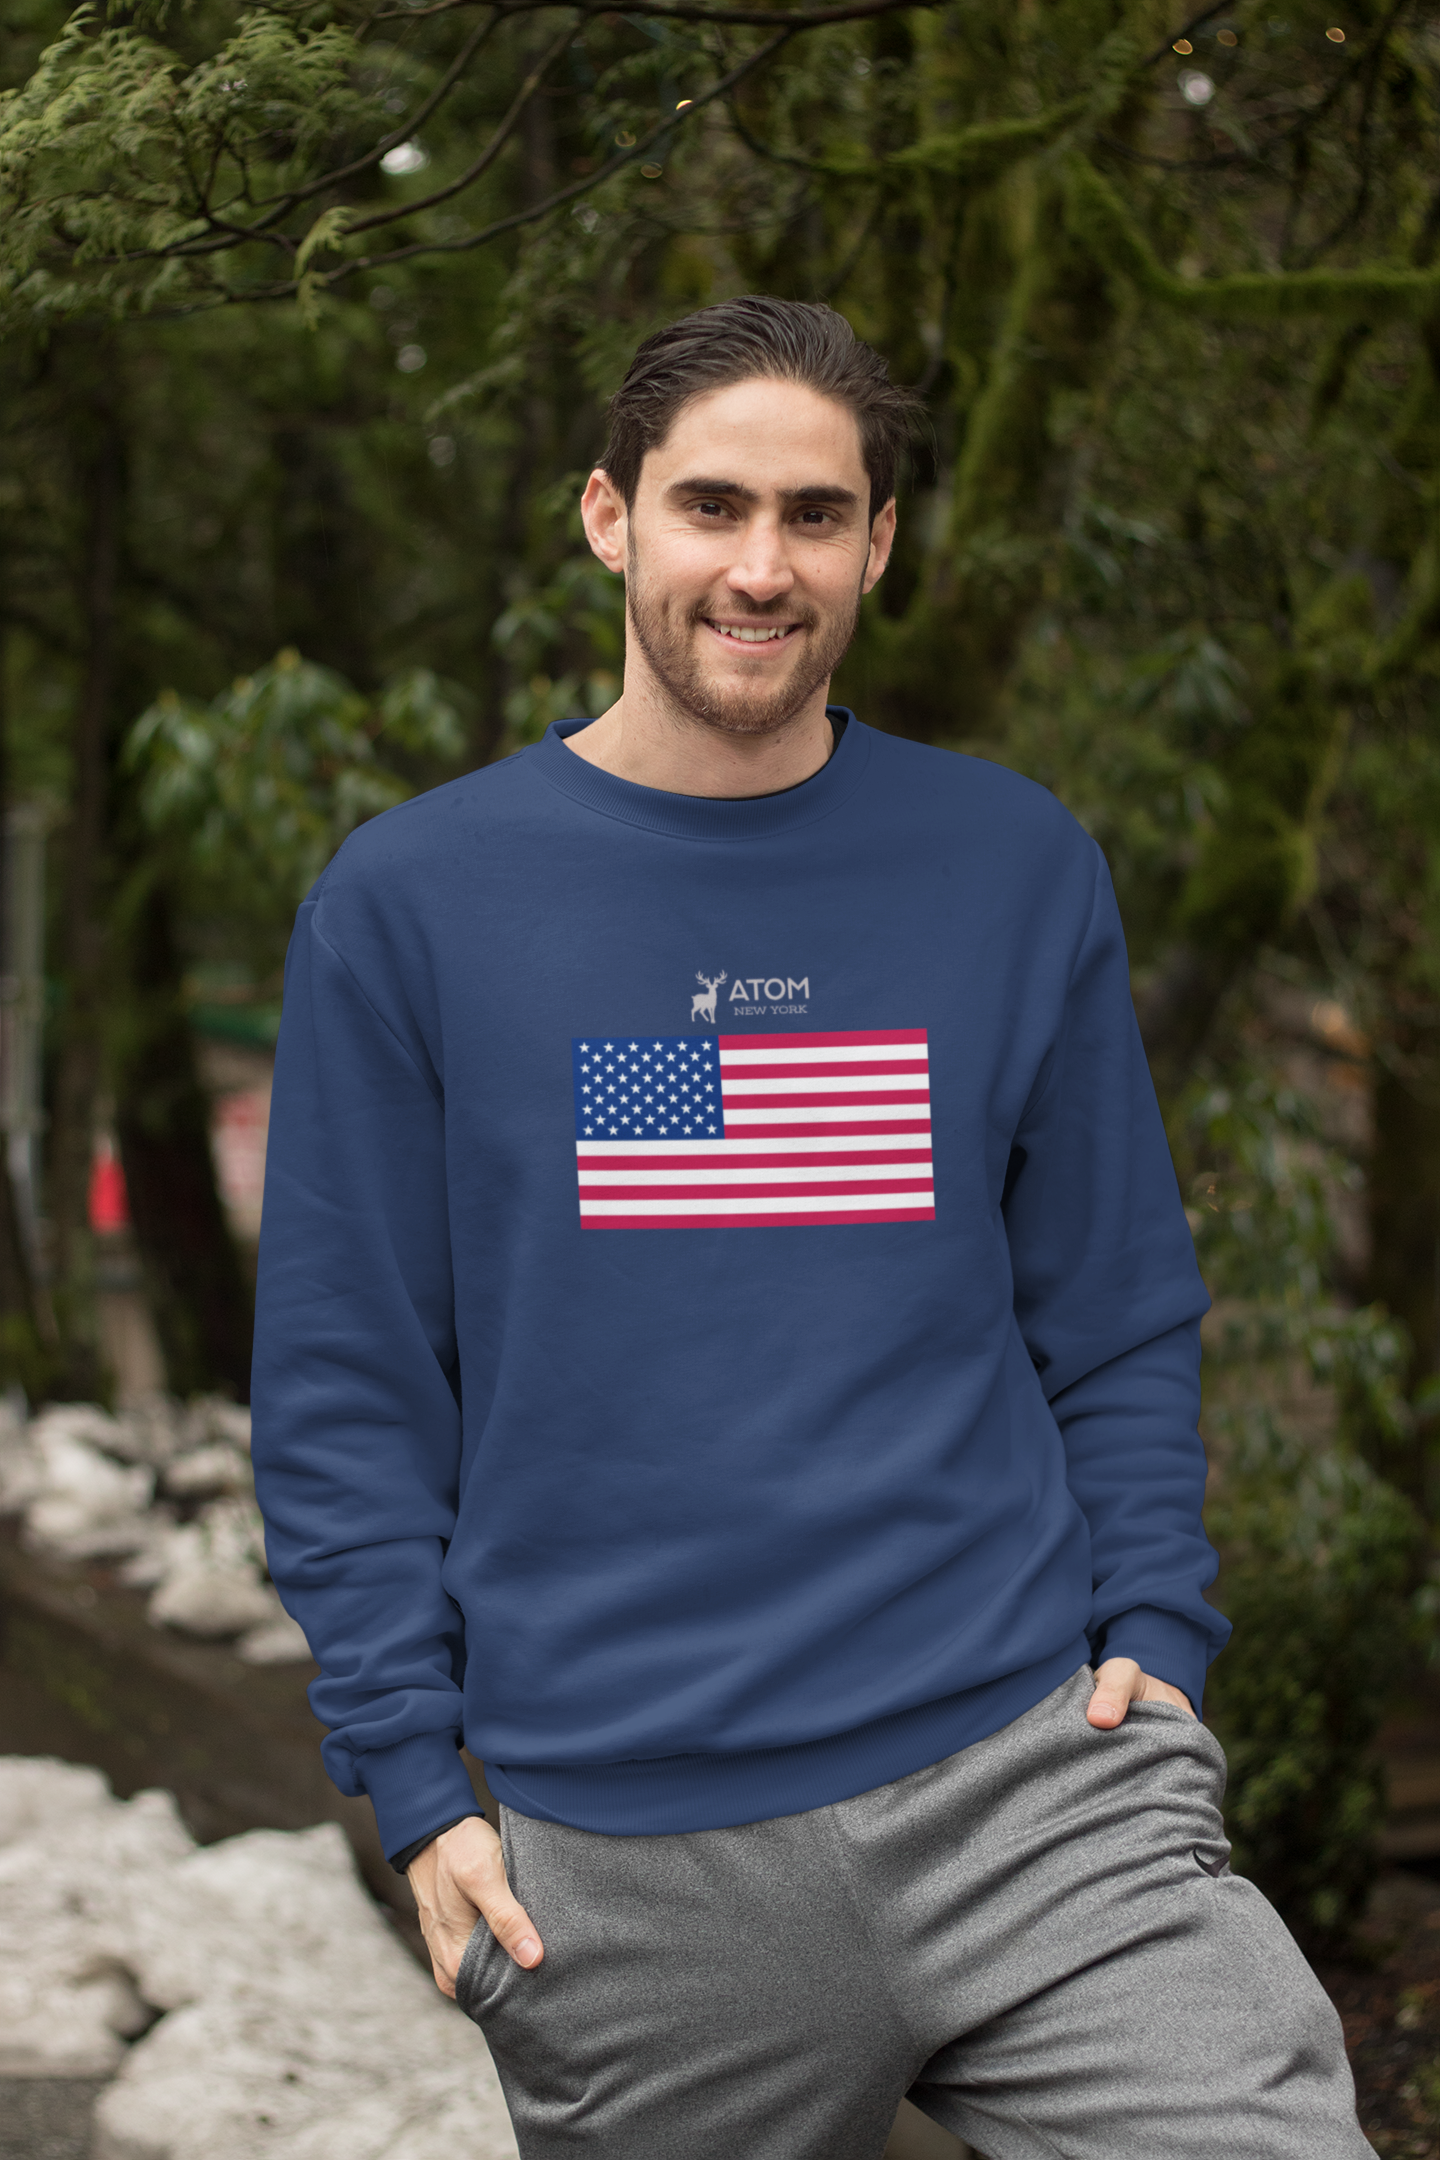 ATOM Signature American Flag Navy Blue Sweatshirt For Men